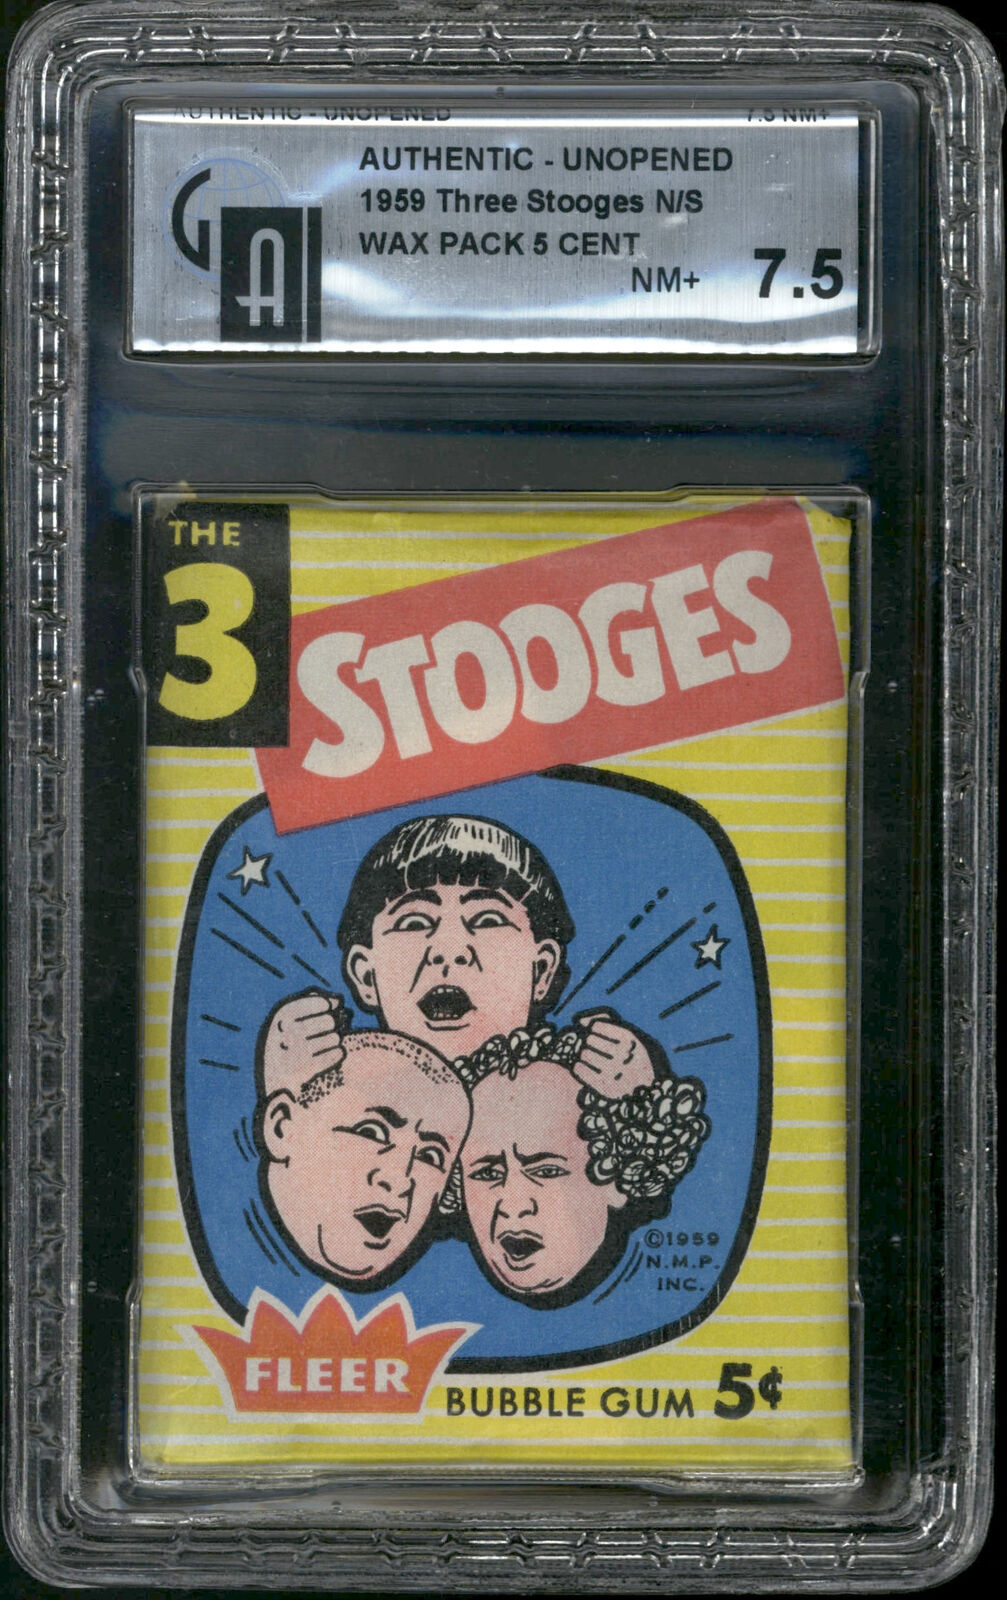 1959 Three Stooges N/S Wax Pack 5 Cent GAI 7.5 NM+